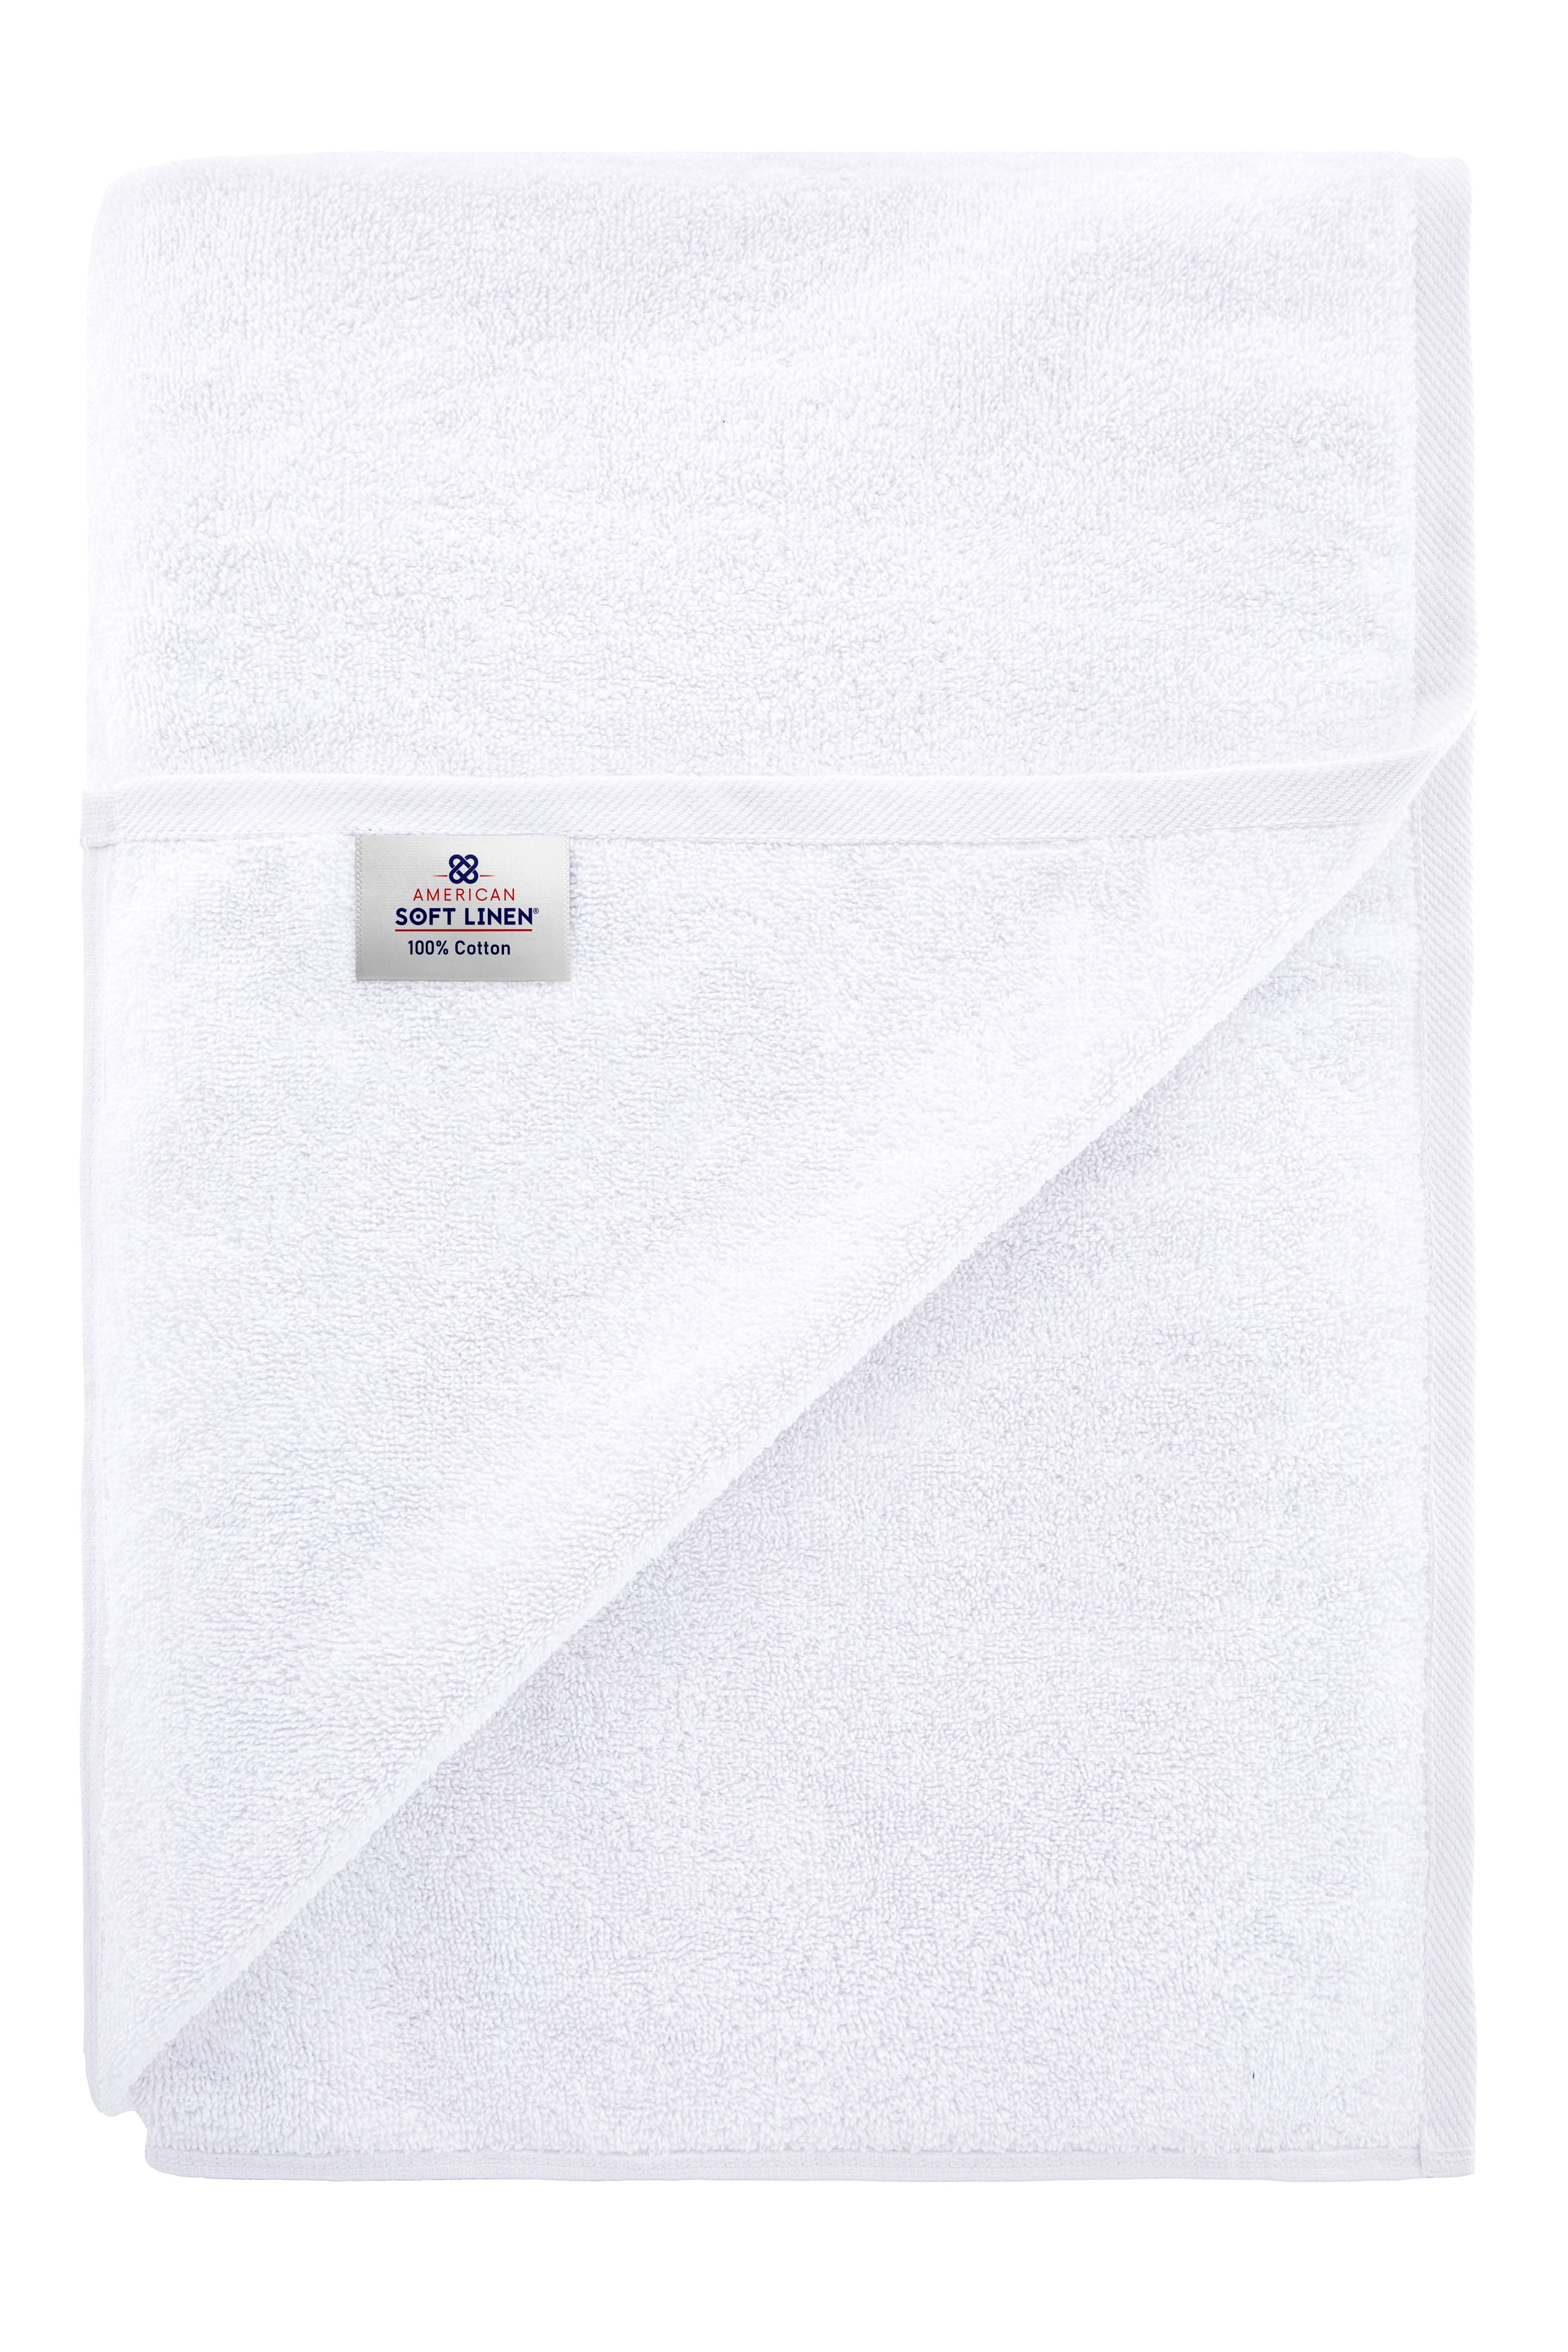 Cotton Paradise Oversized Bath Sheet, 100% Cotton 40x80 Clearance Jumbo  Large Bath Towel for Bathroom, Dark Gray